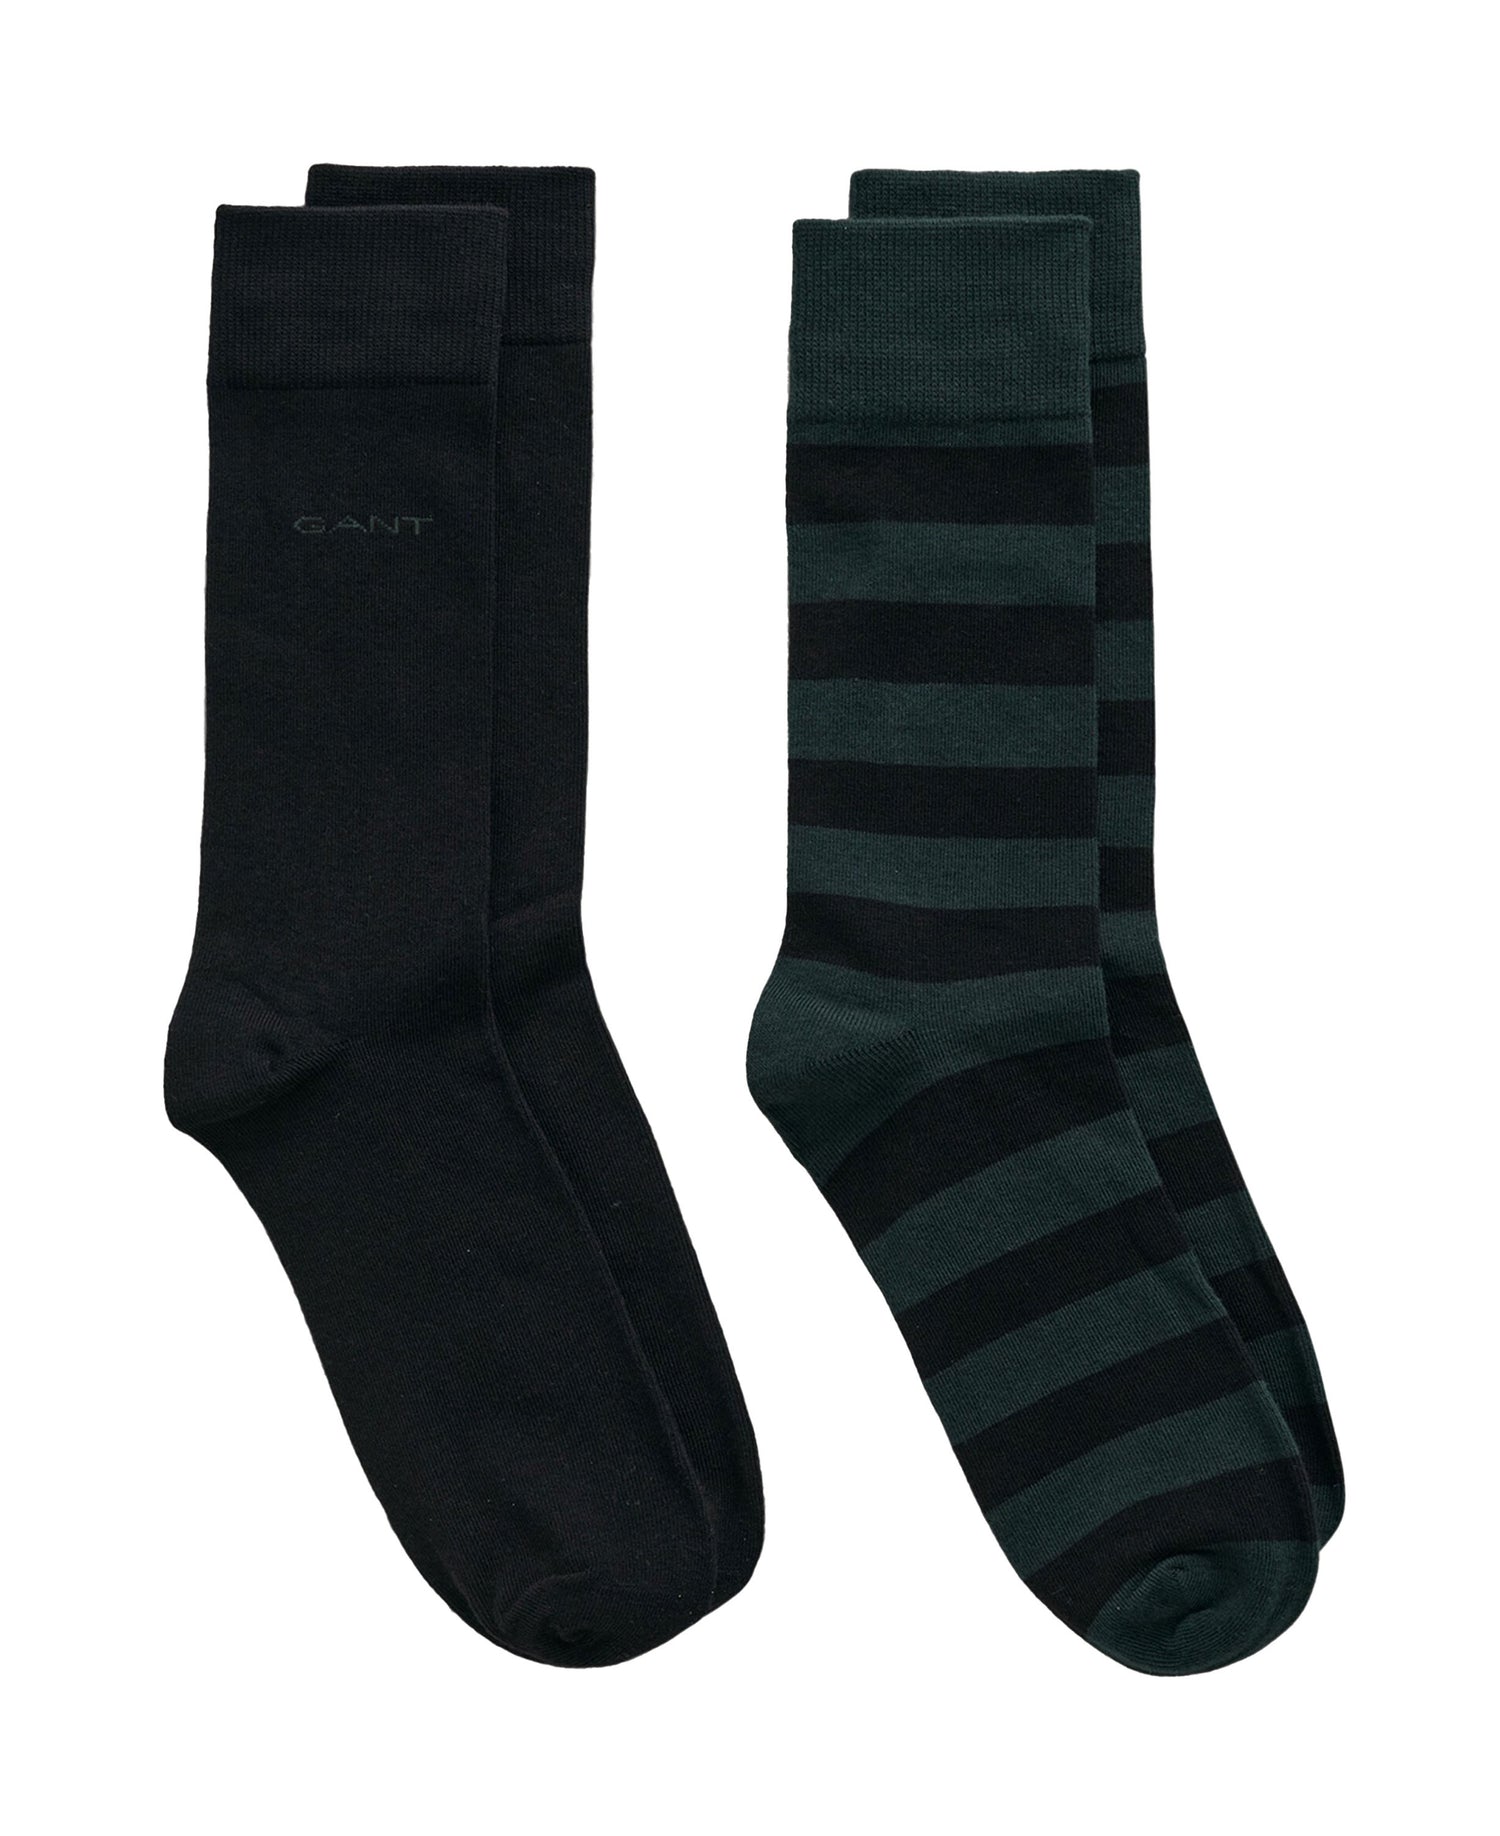 Barstripe And Solid Socks 2-Pack - Tartan Green